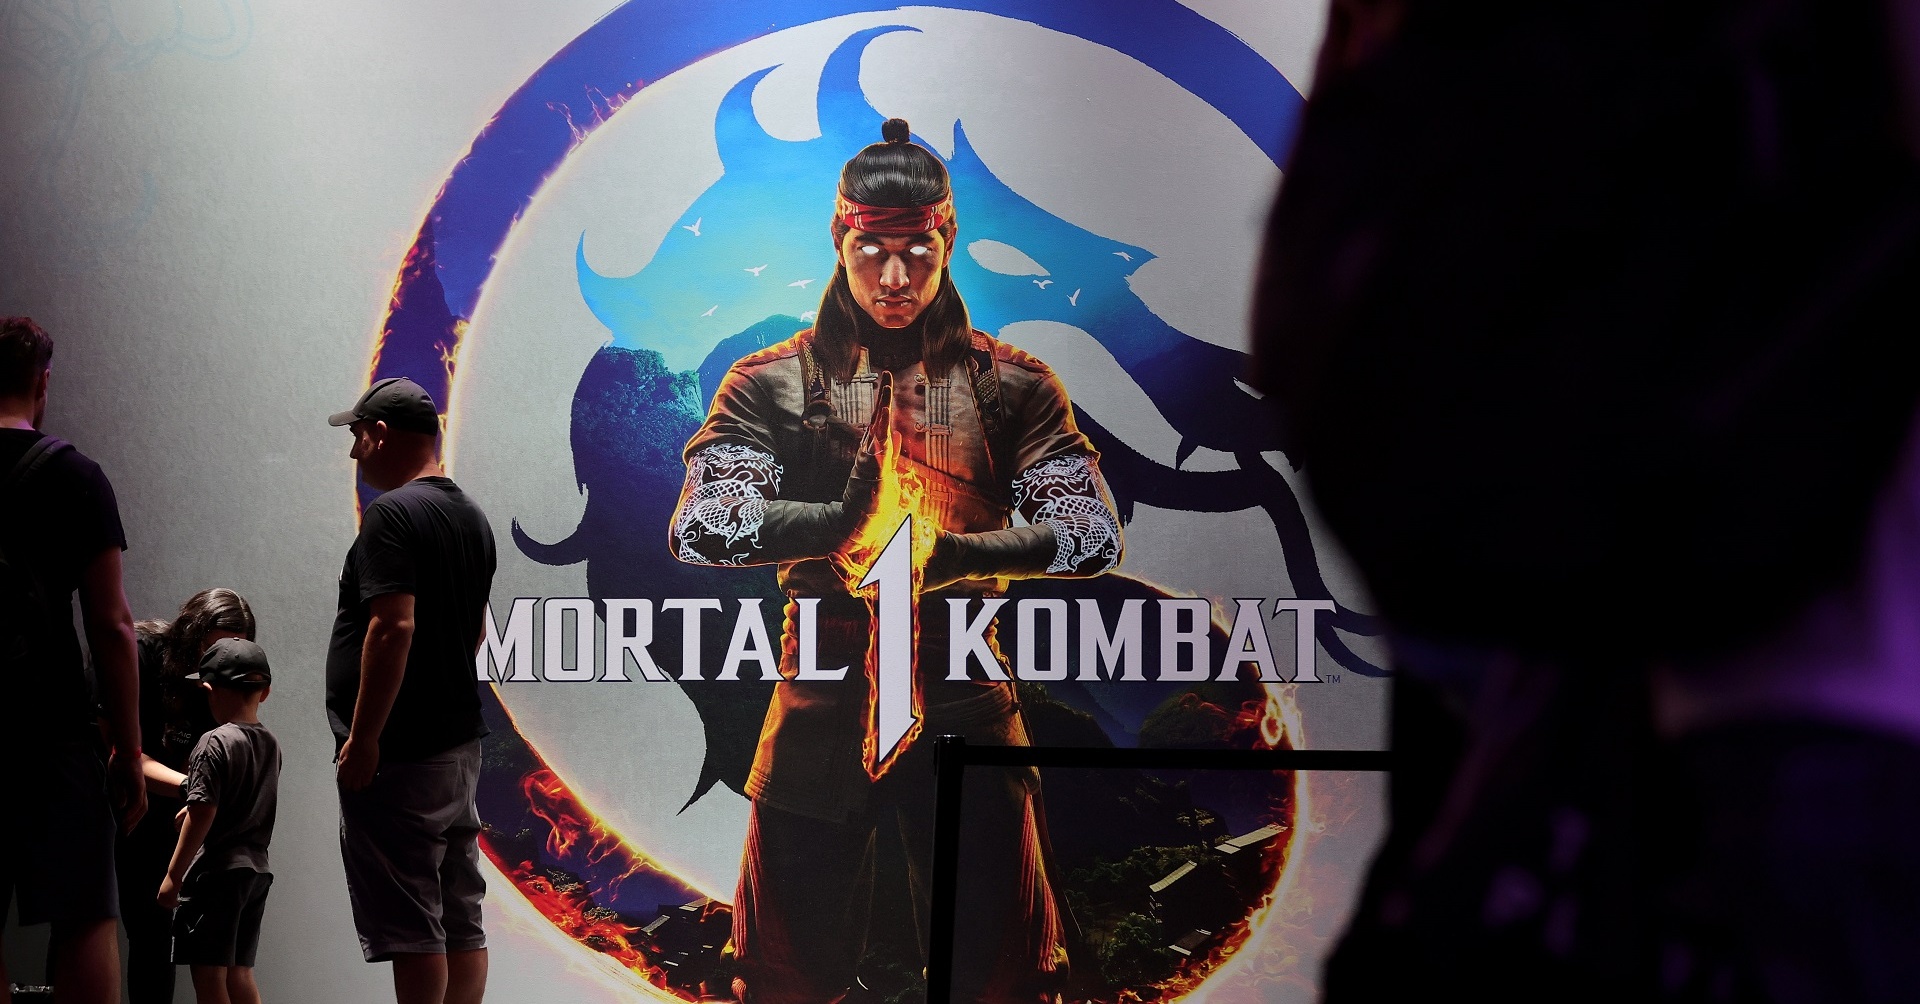   BKFC    ,     Mortal Kombat ()